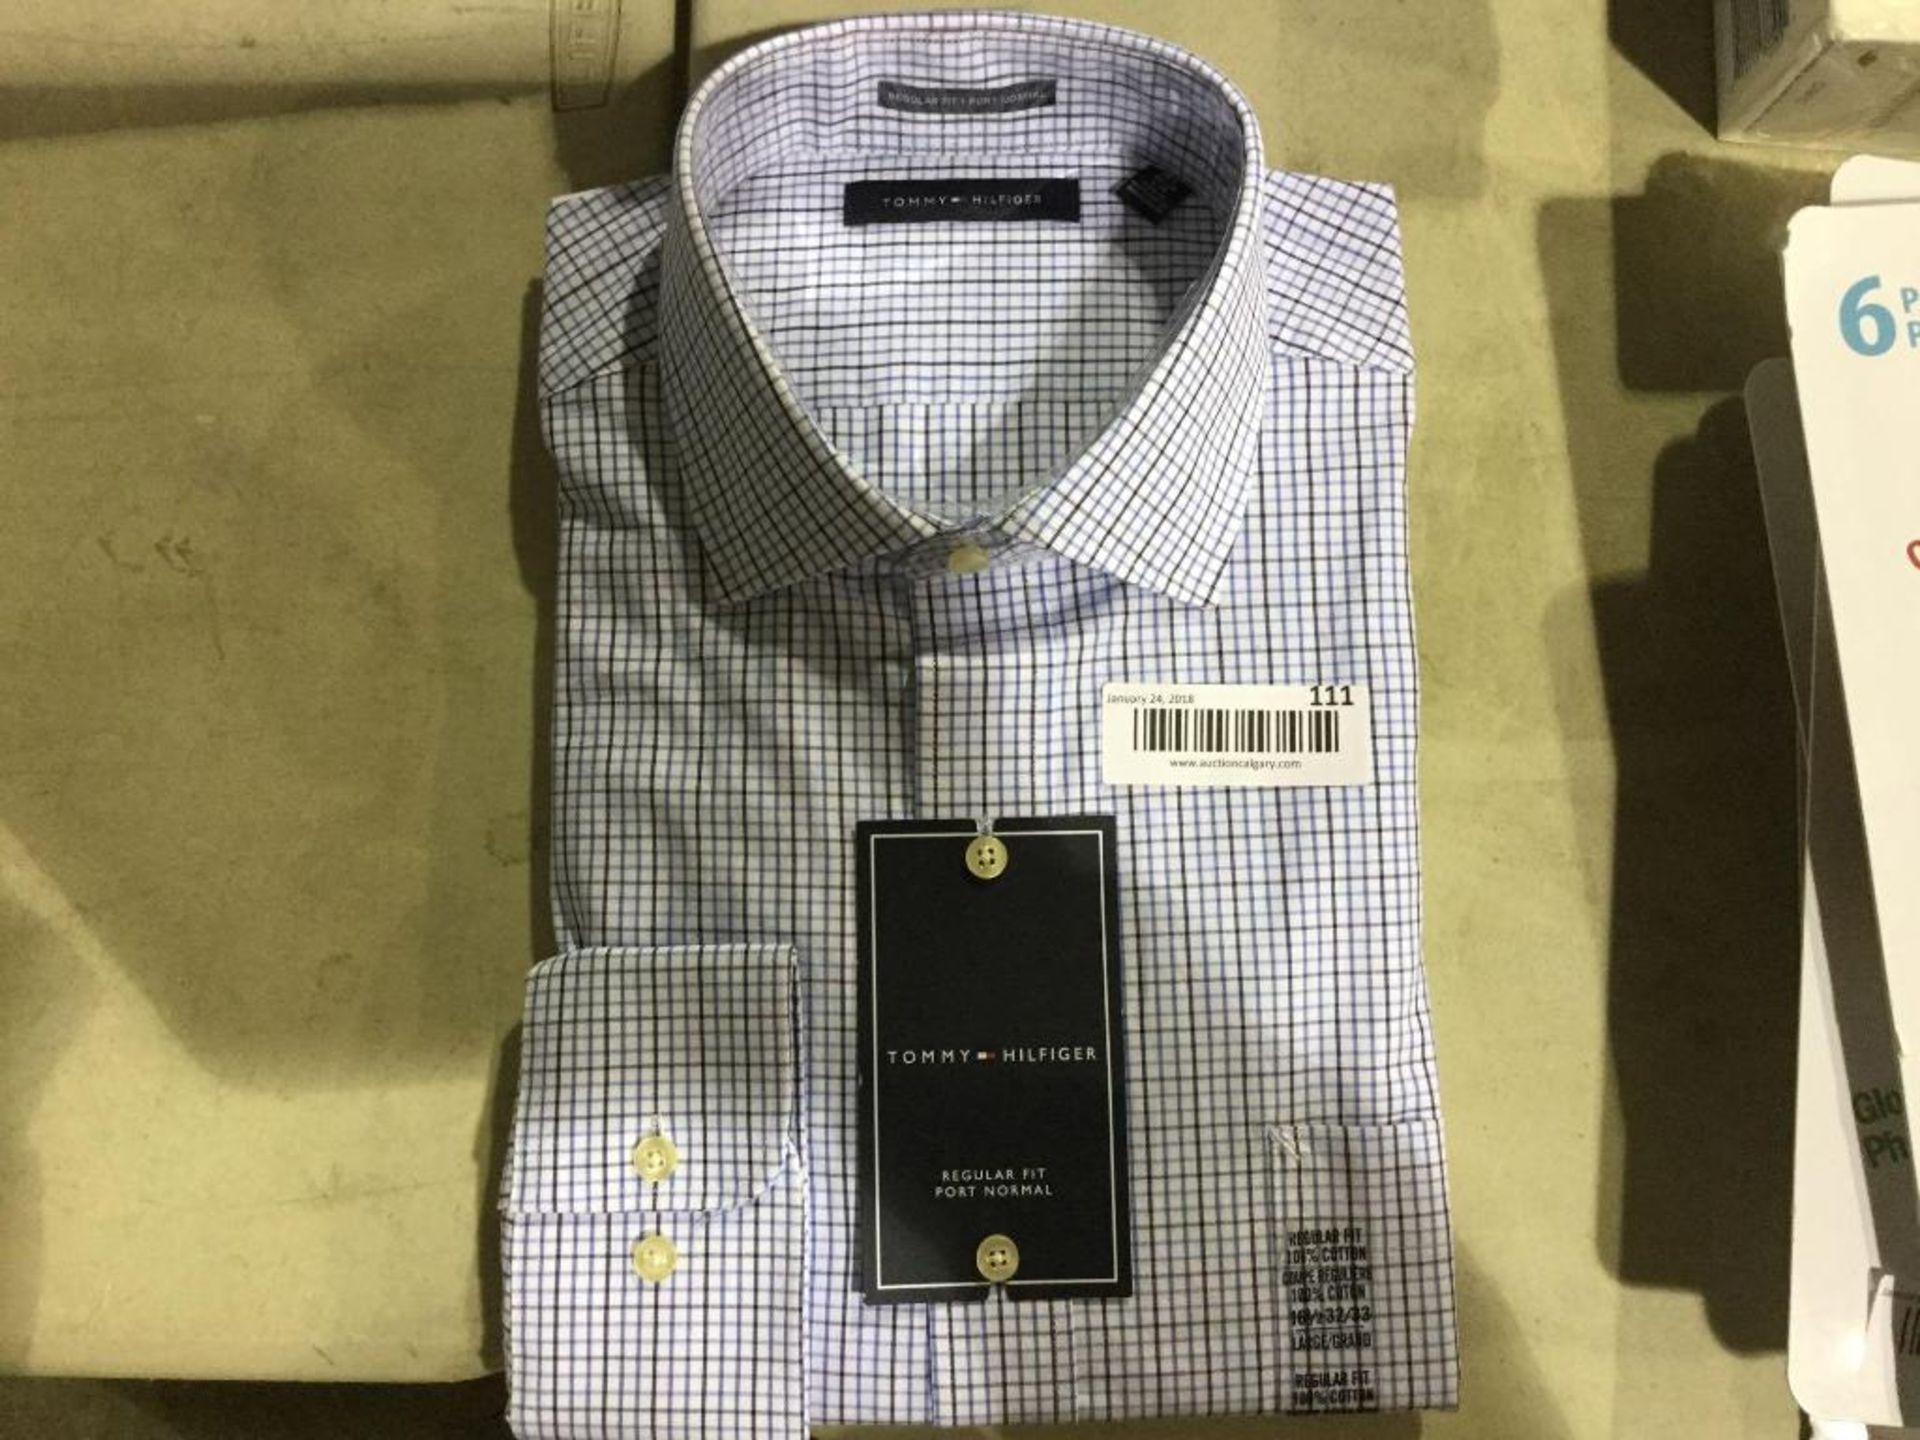 Tommy Hilfiger Plaid Shirt - Blue and Grey - Size Large - Regular fit